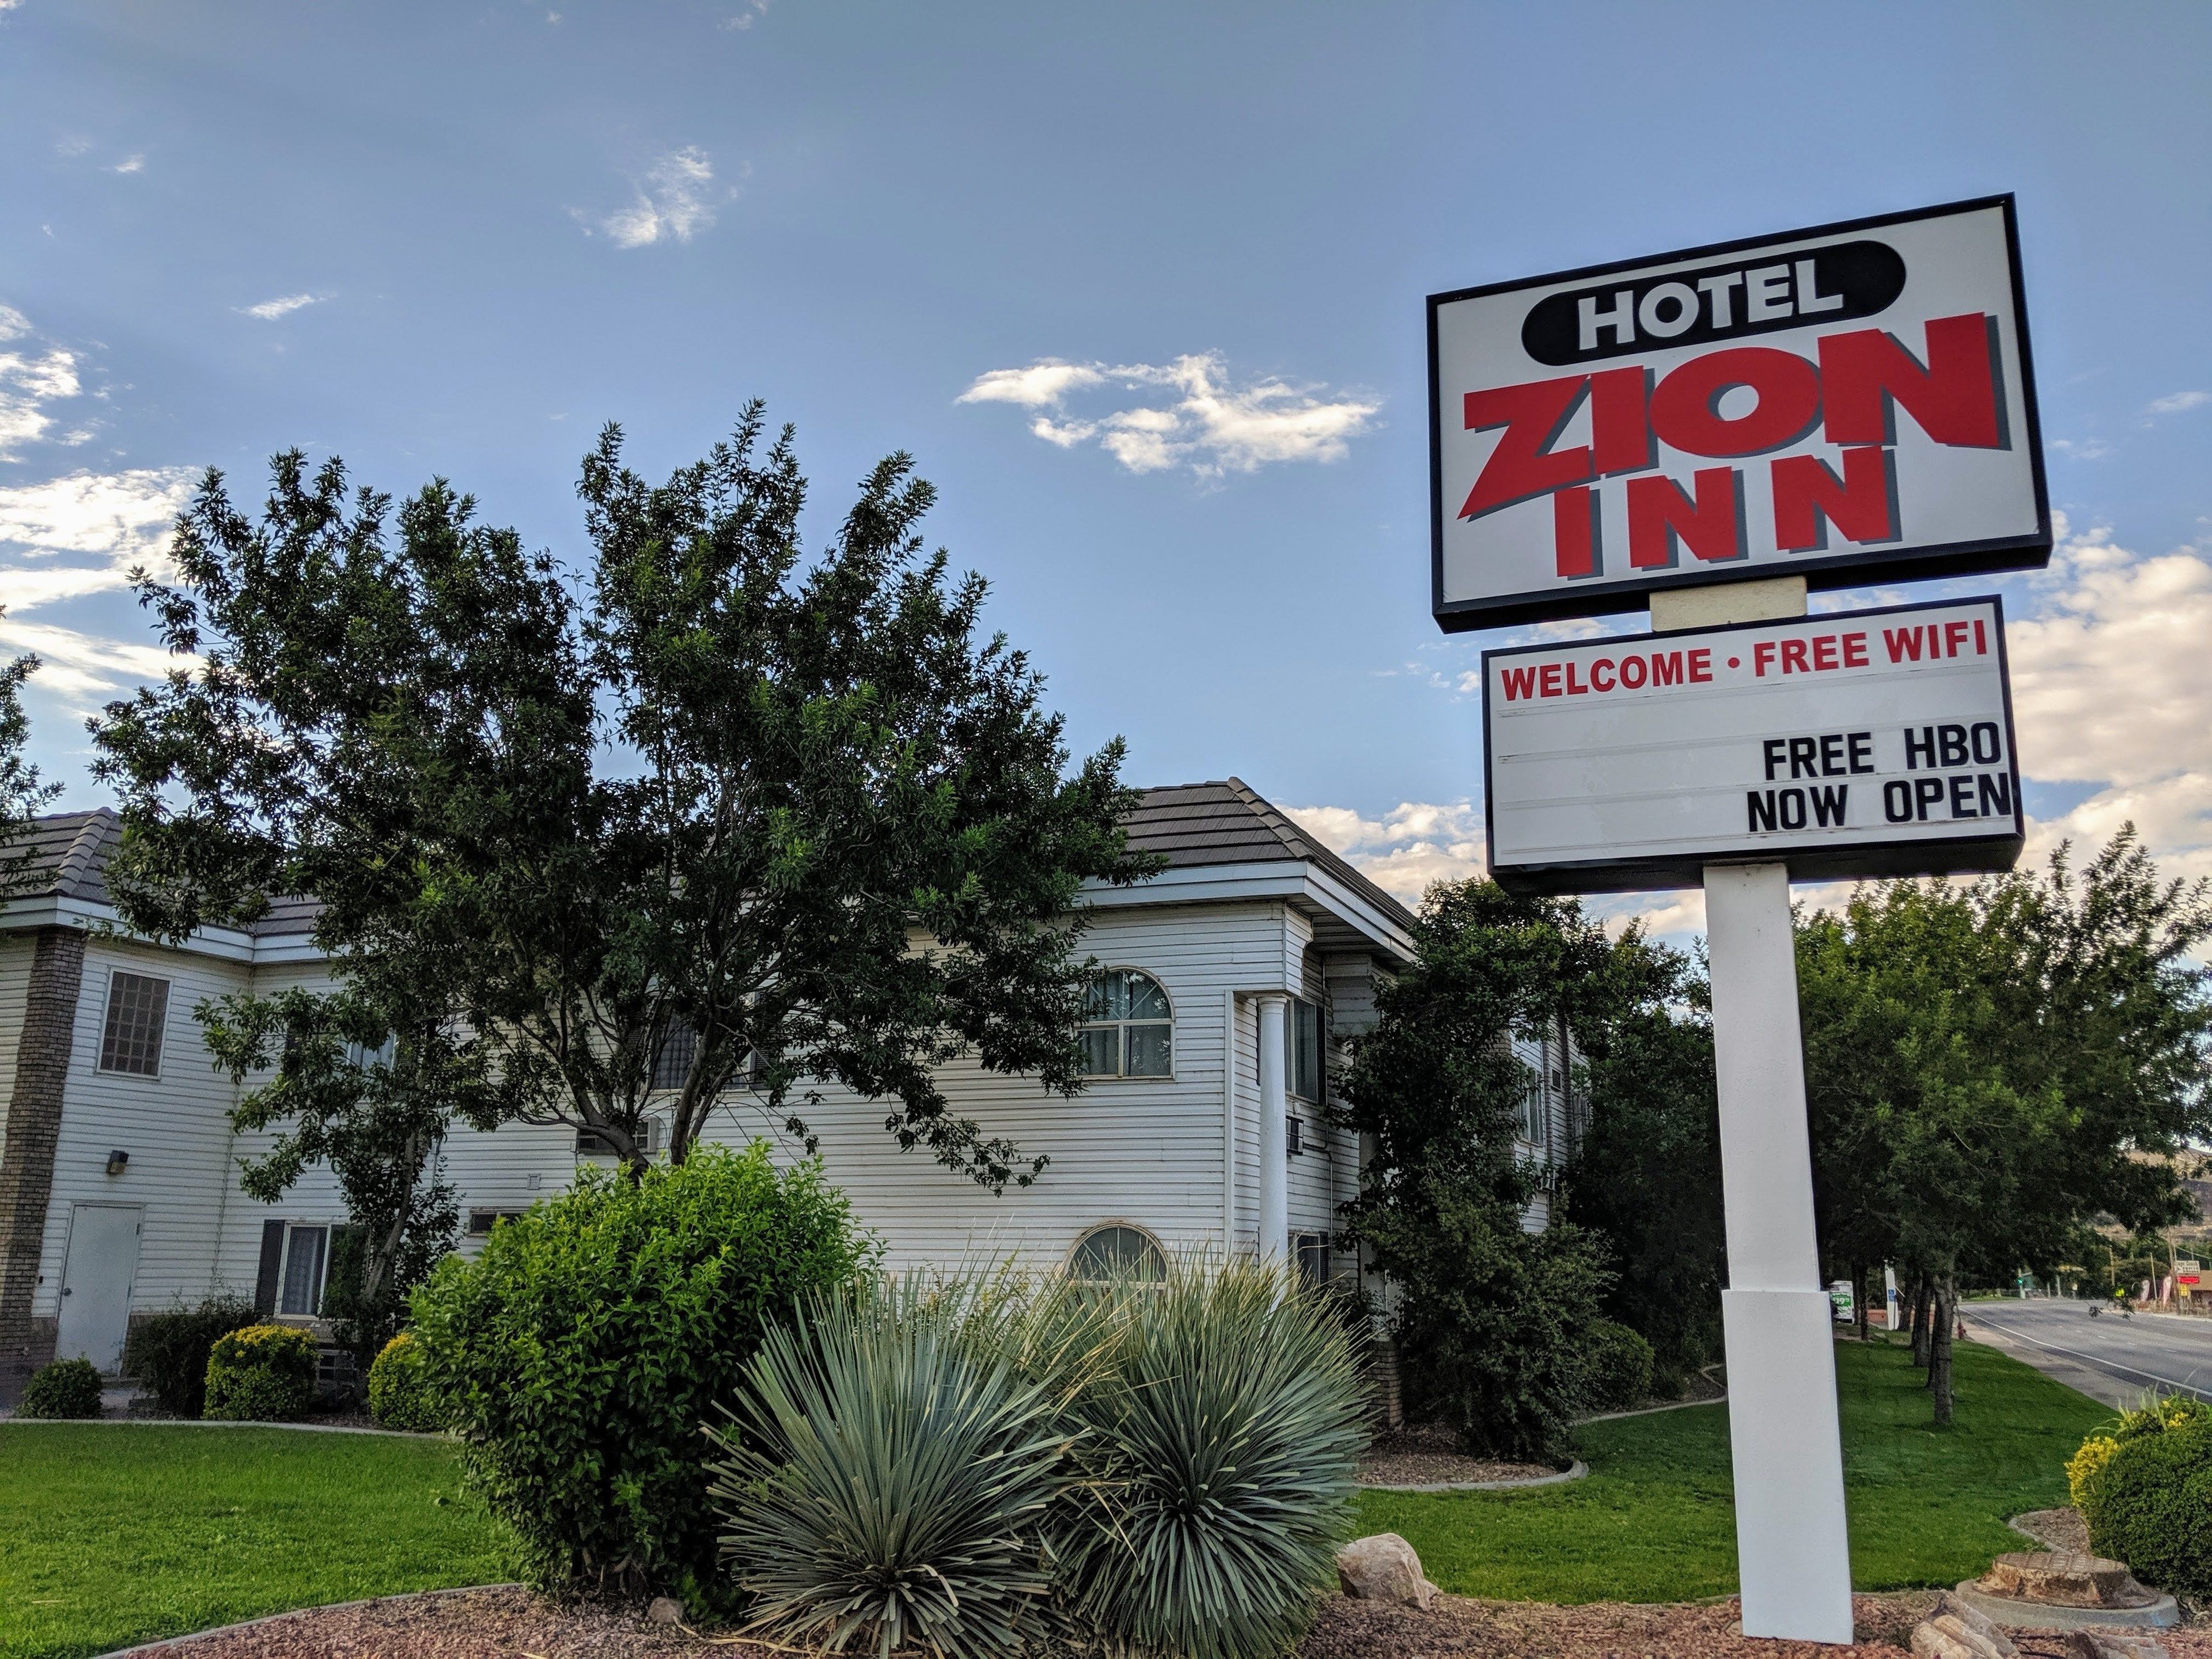 Hotel Zion Inn